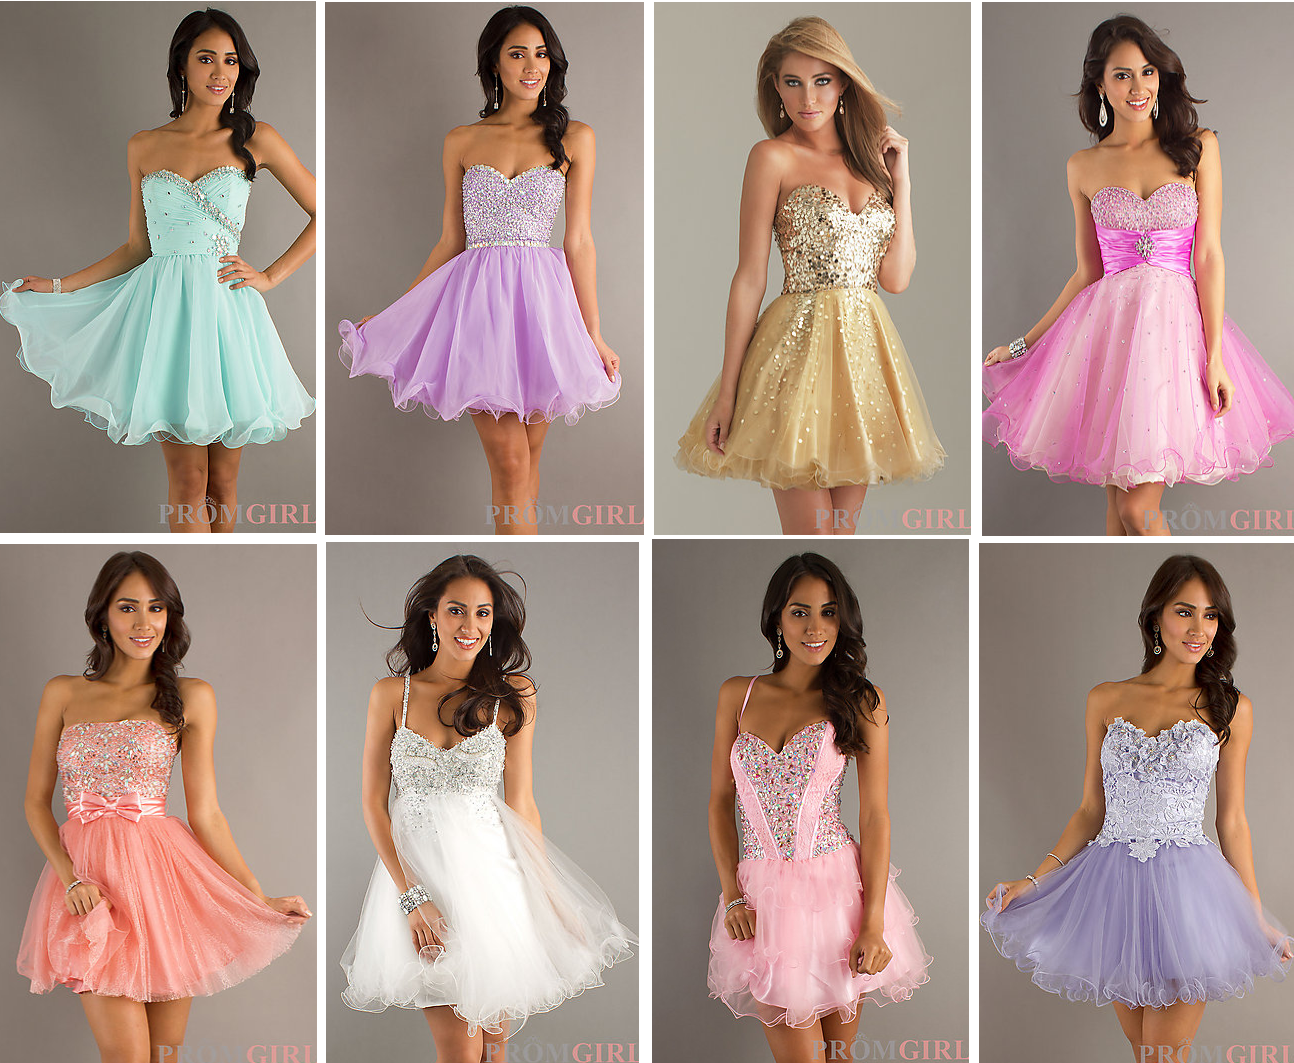 Cute Dresses For Petite Ladies : Clothes Review